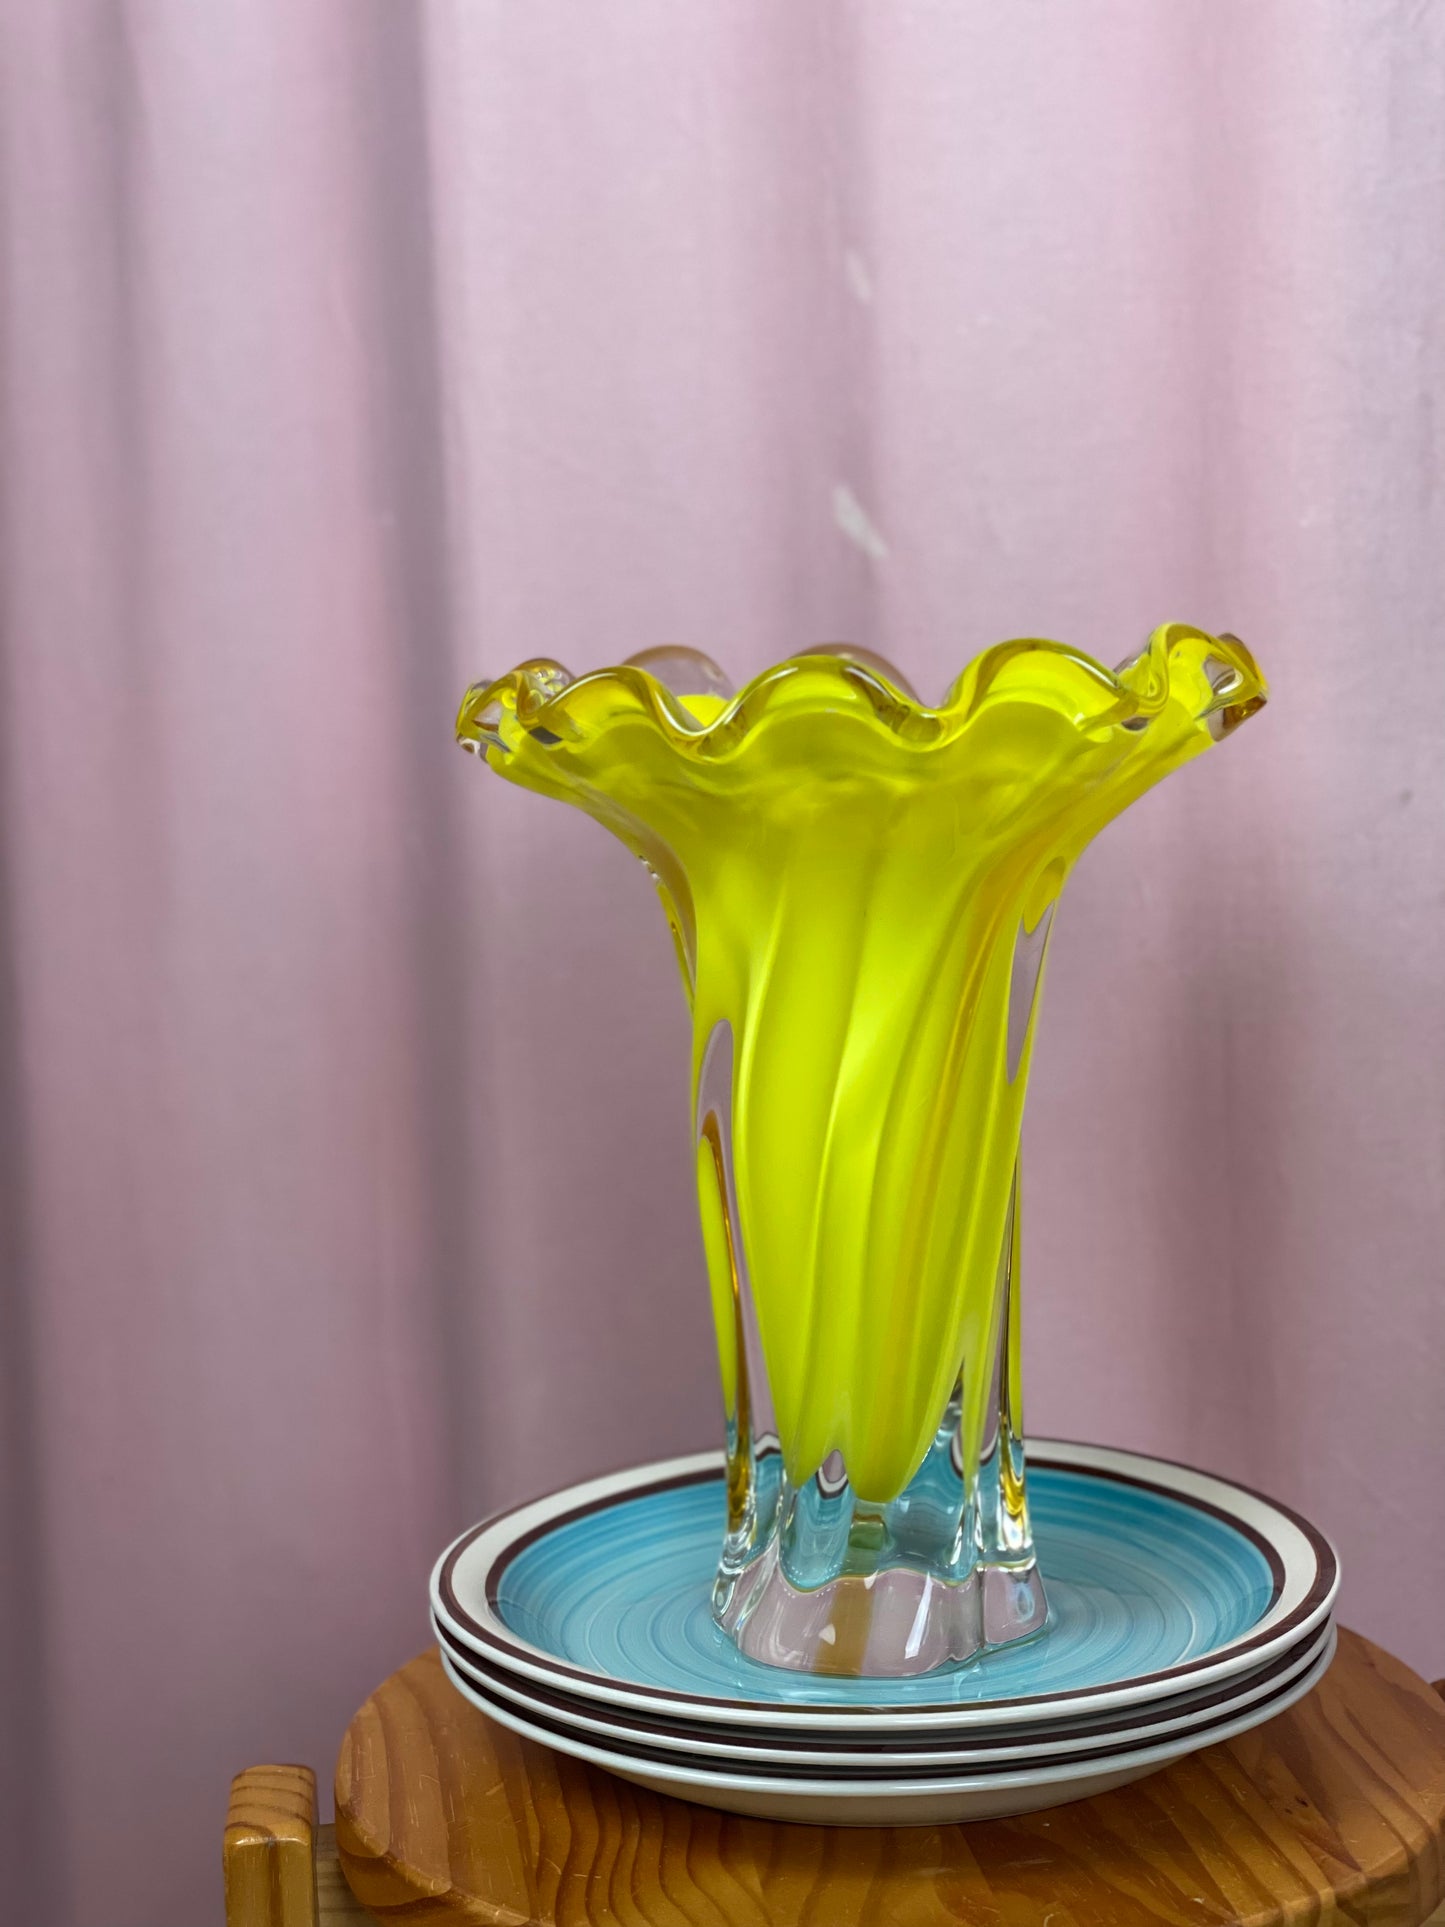 Large yellow glass vase